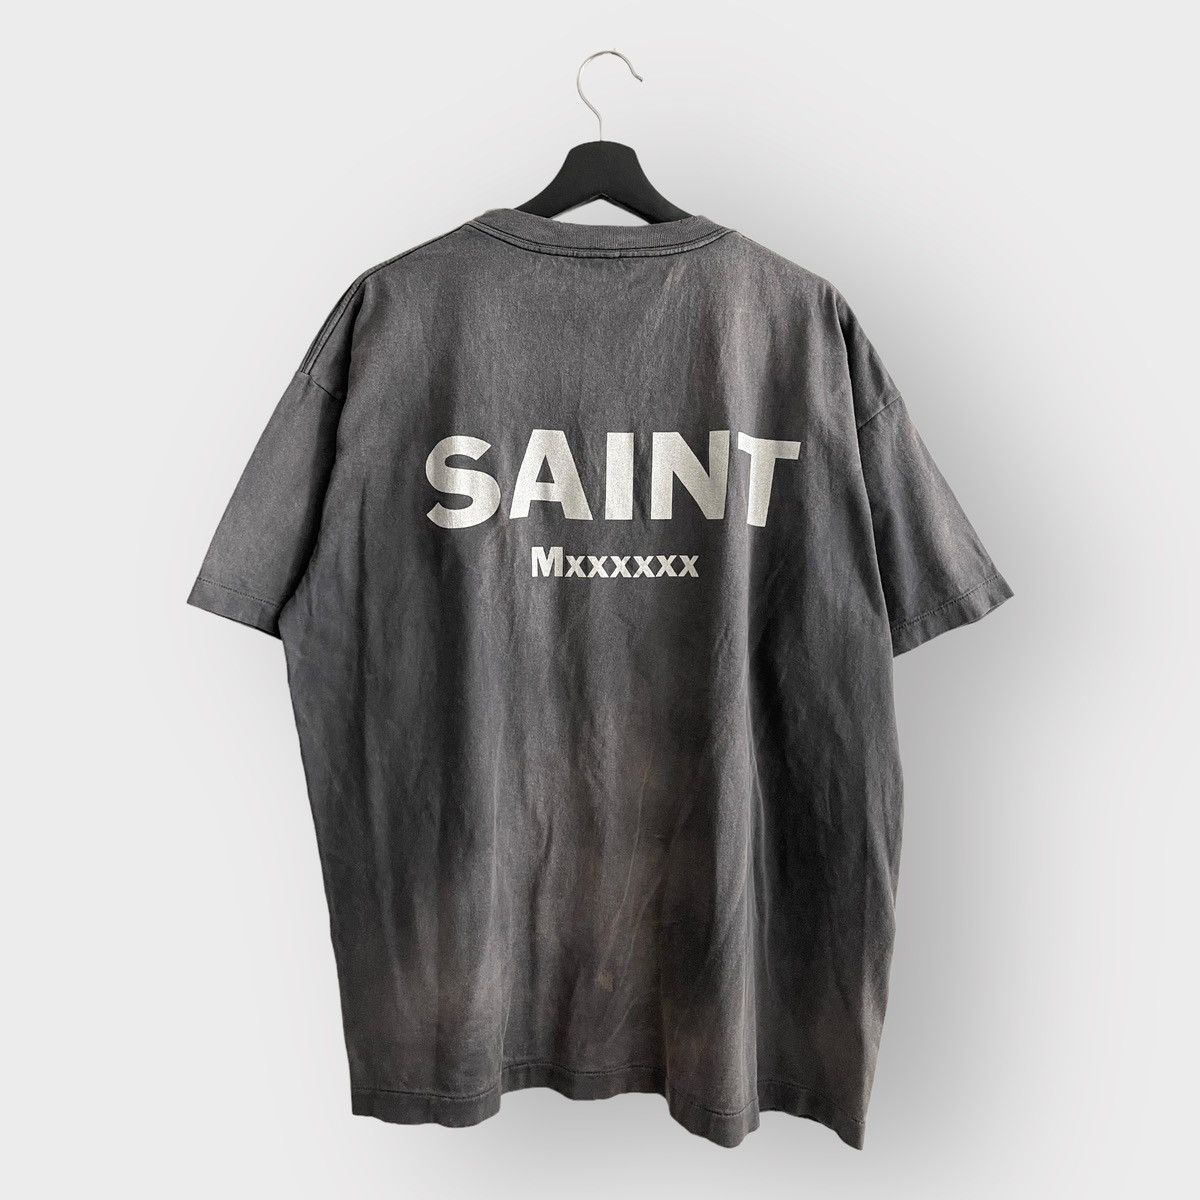 Anima - ARCHIVAL! Saint Michael x Neon Genesis Evangelion Tee - 2